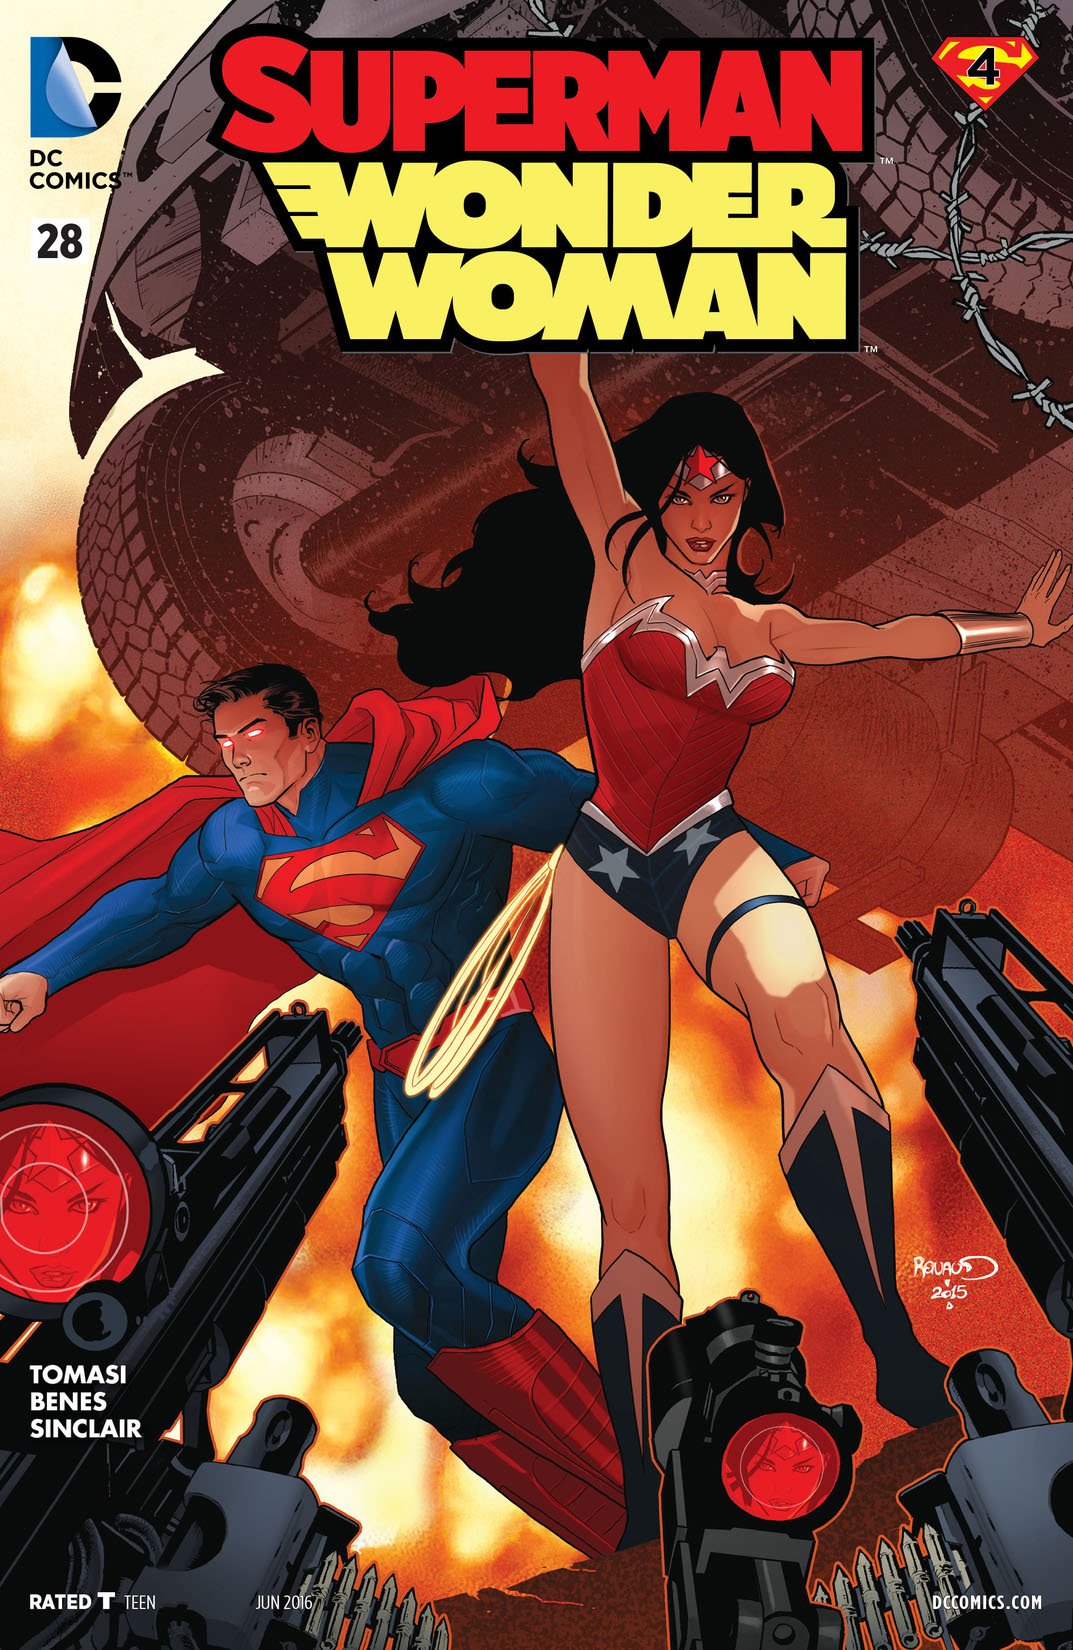 Superman/Wonder Woman #28 preview images